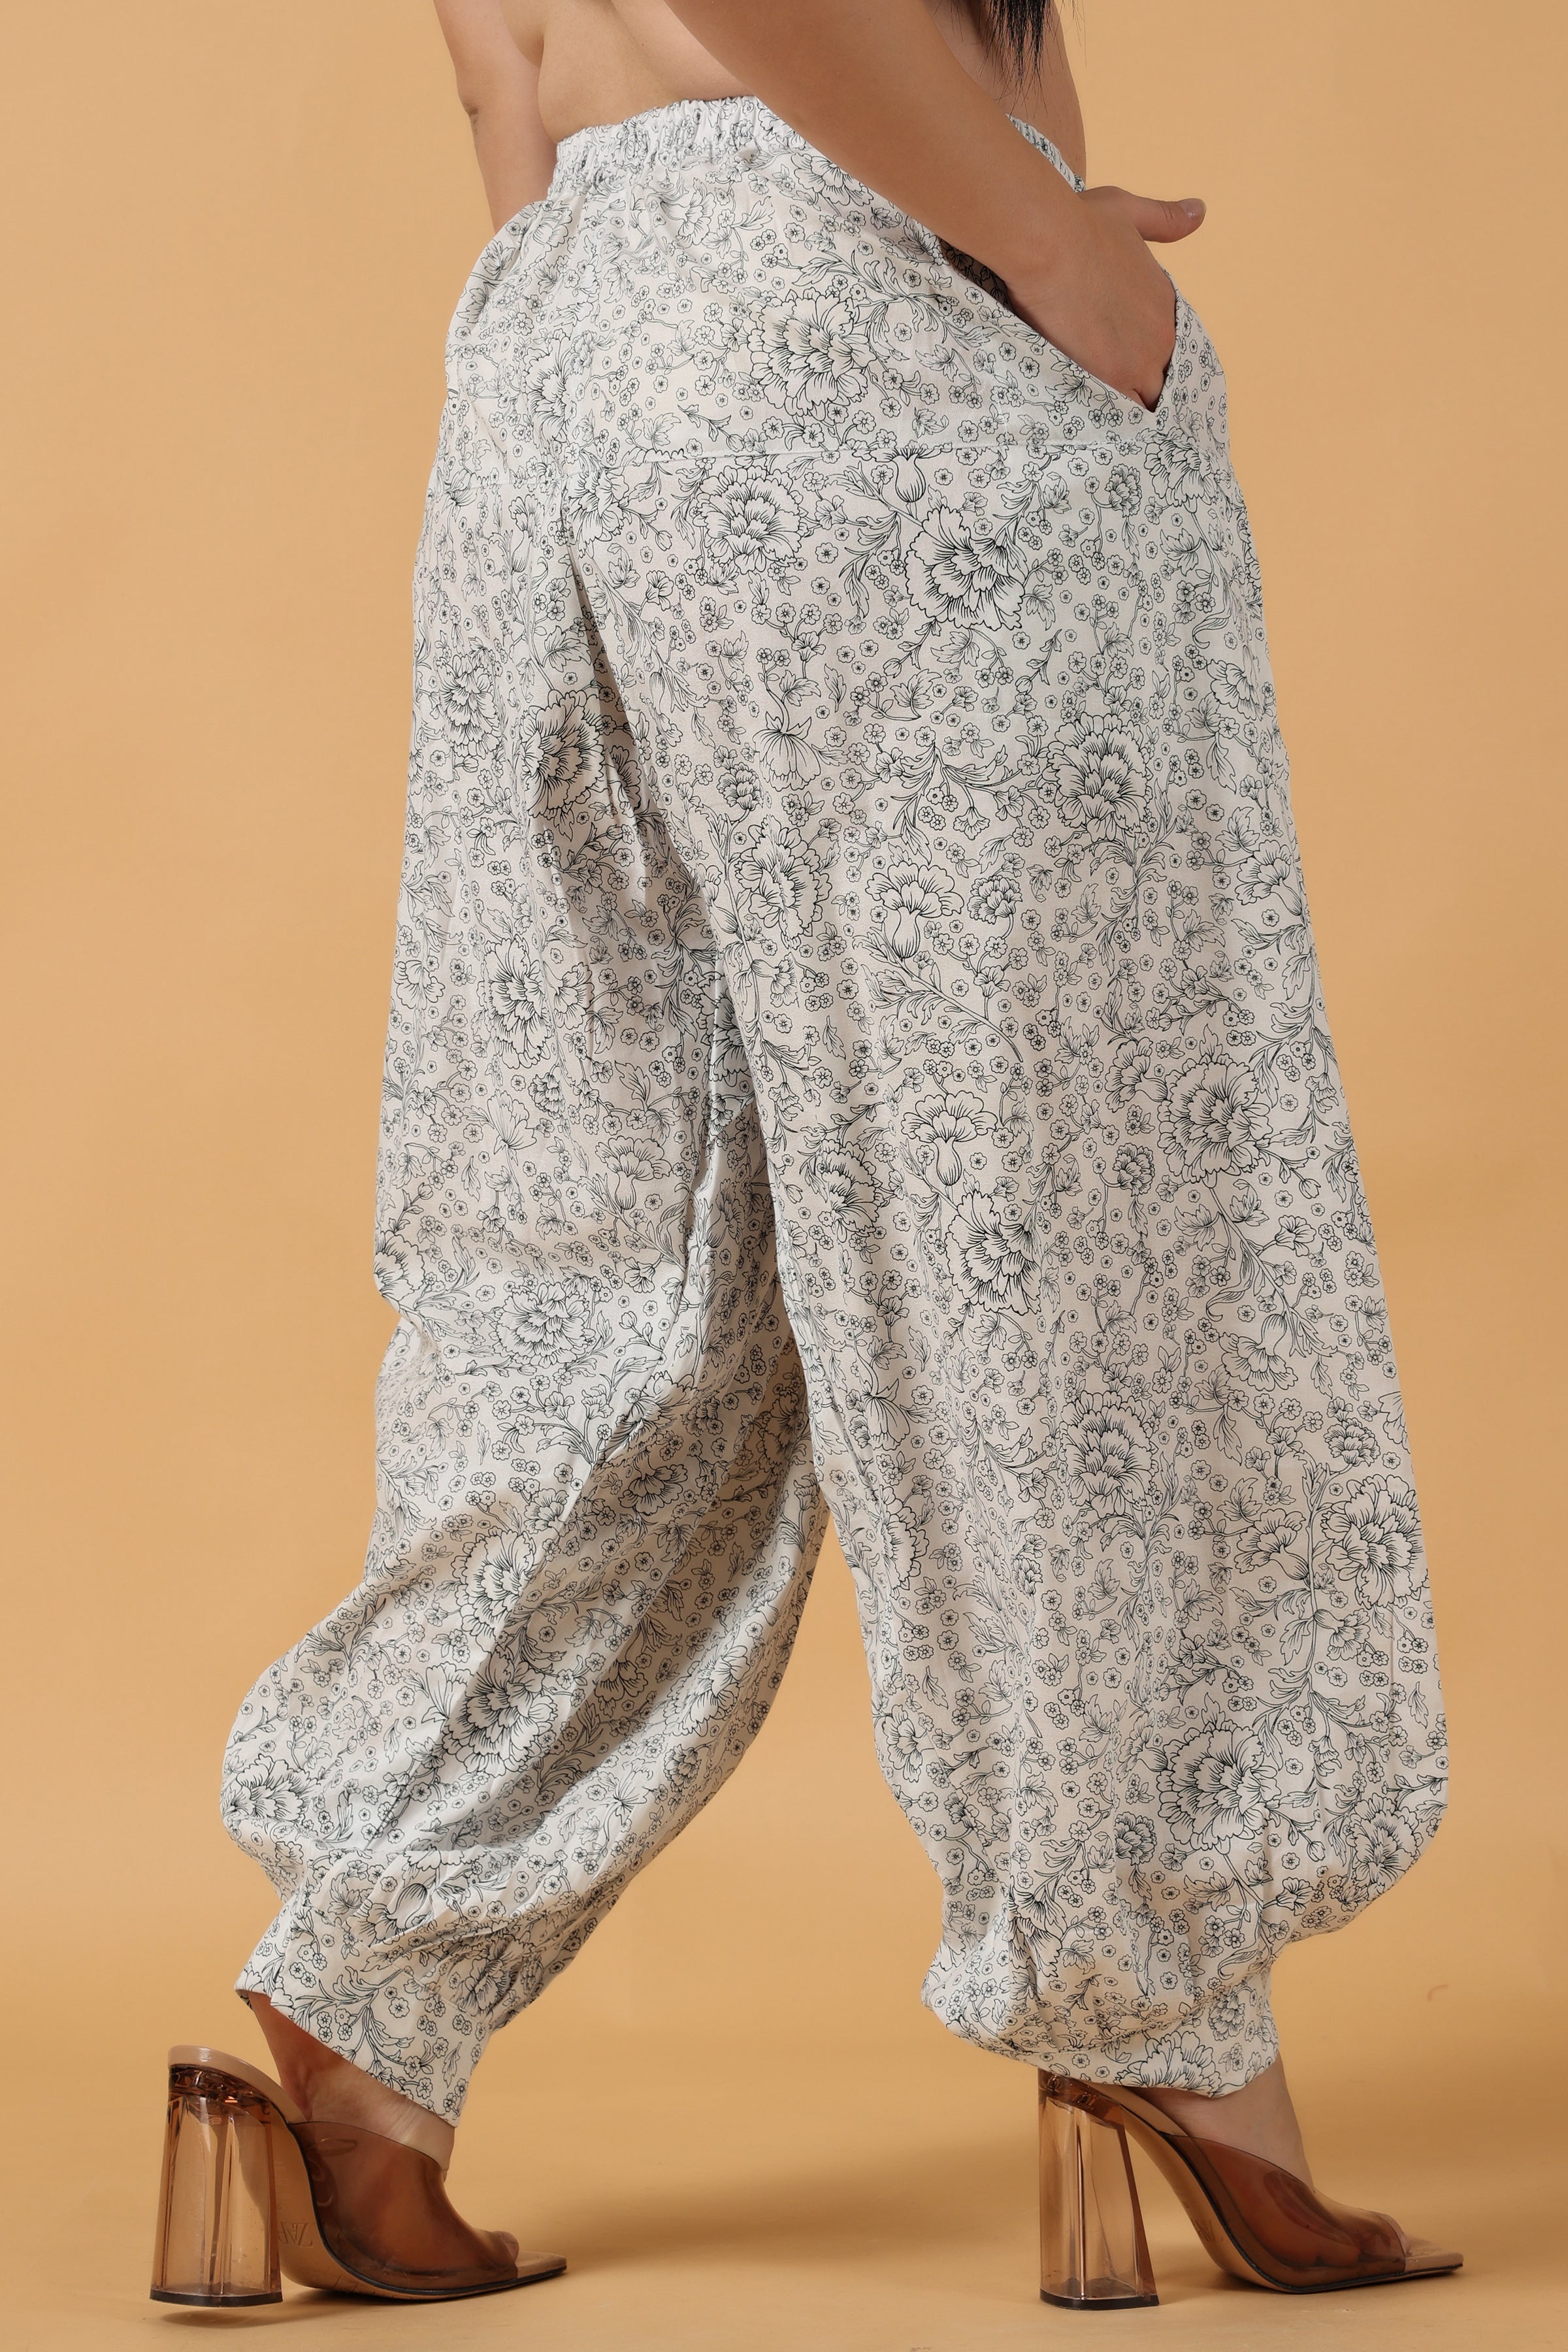 Buy LUJOSO Womens Rayon Harem Pant  Harem Pant for Women  Dhoti   Patiala Pants  Stylish Afghani Salwar Palazzo Pants  Comfortable   Regular Fit Pants for Yoga Dancing Beige